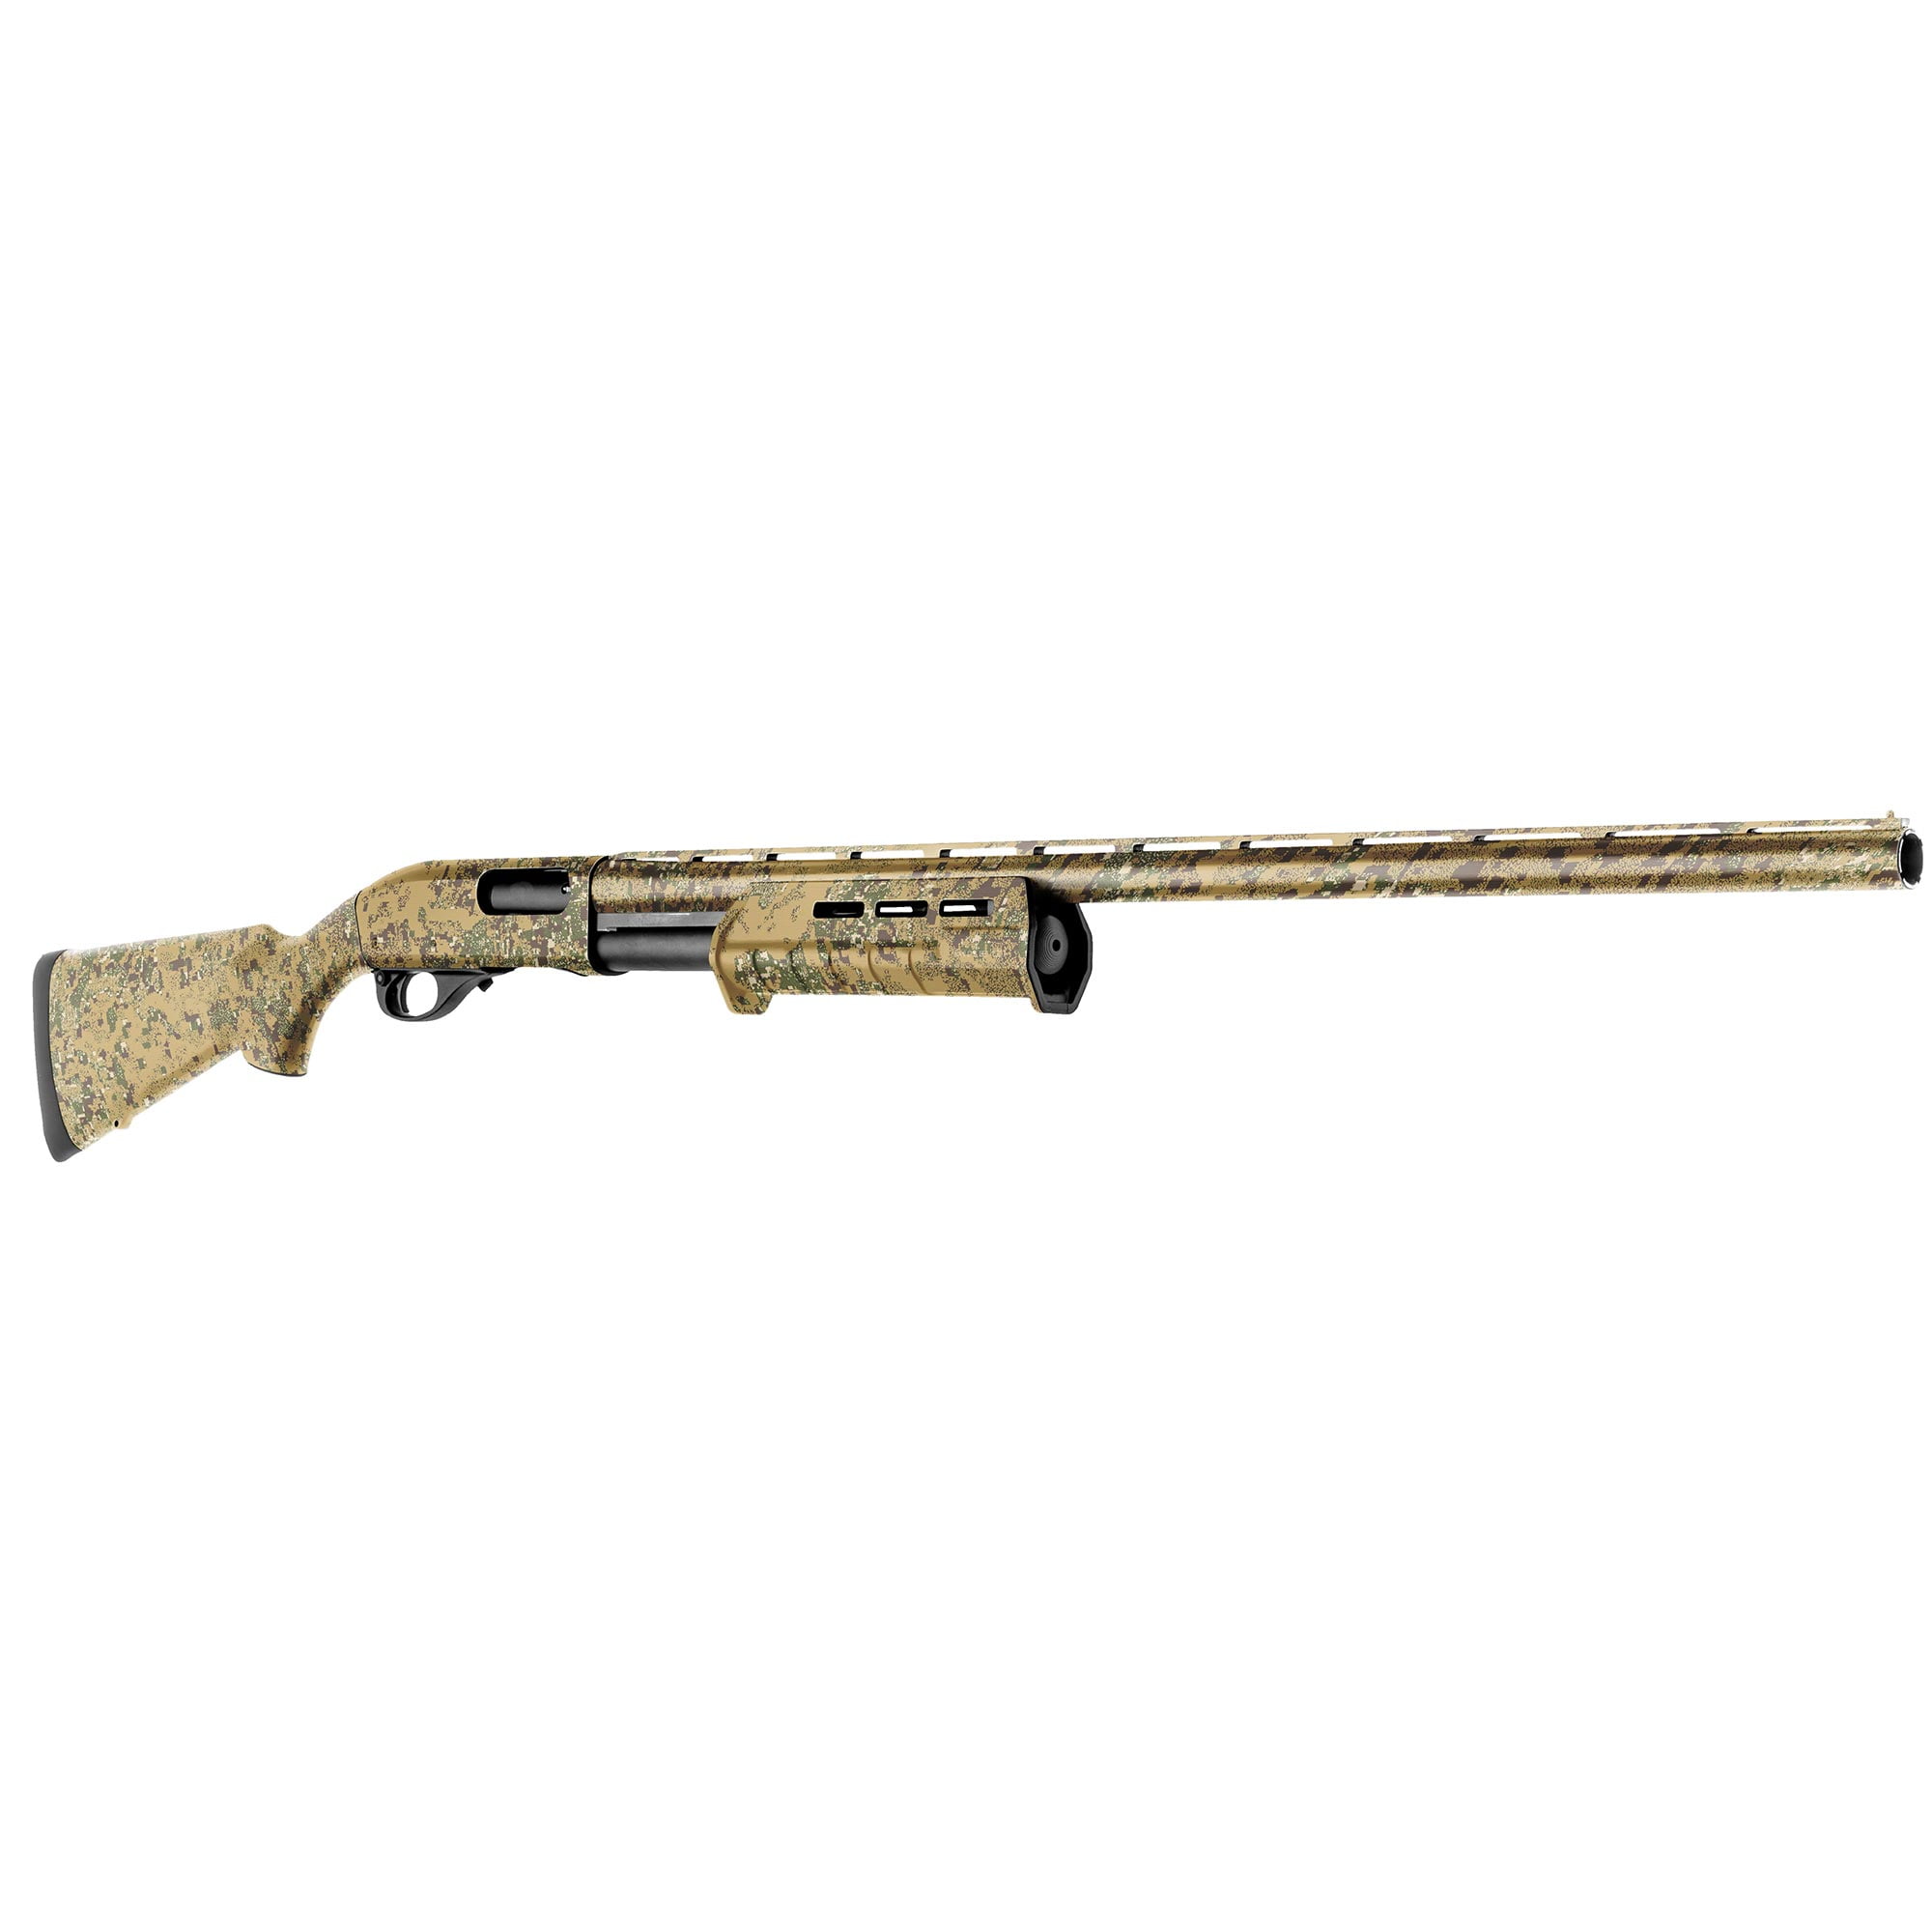 Mossy Oak Graphics 14004-BUP Break-Up Pink Shotgun and Rifle Camo Gun Kit 